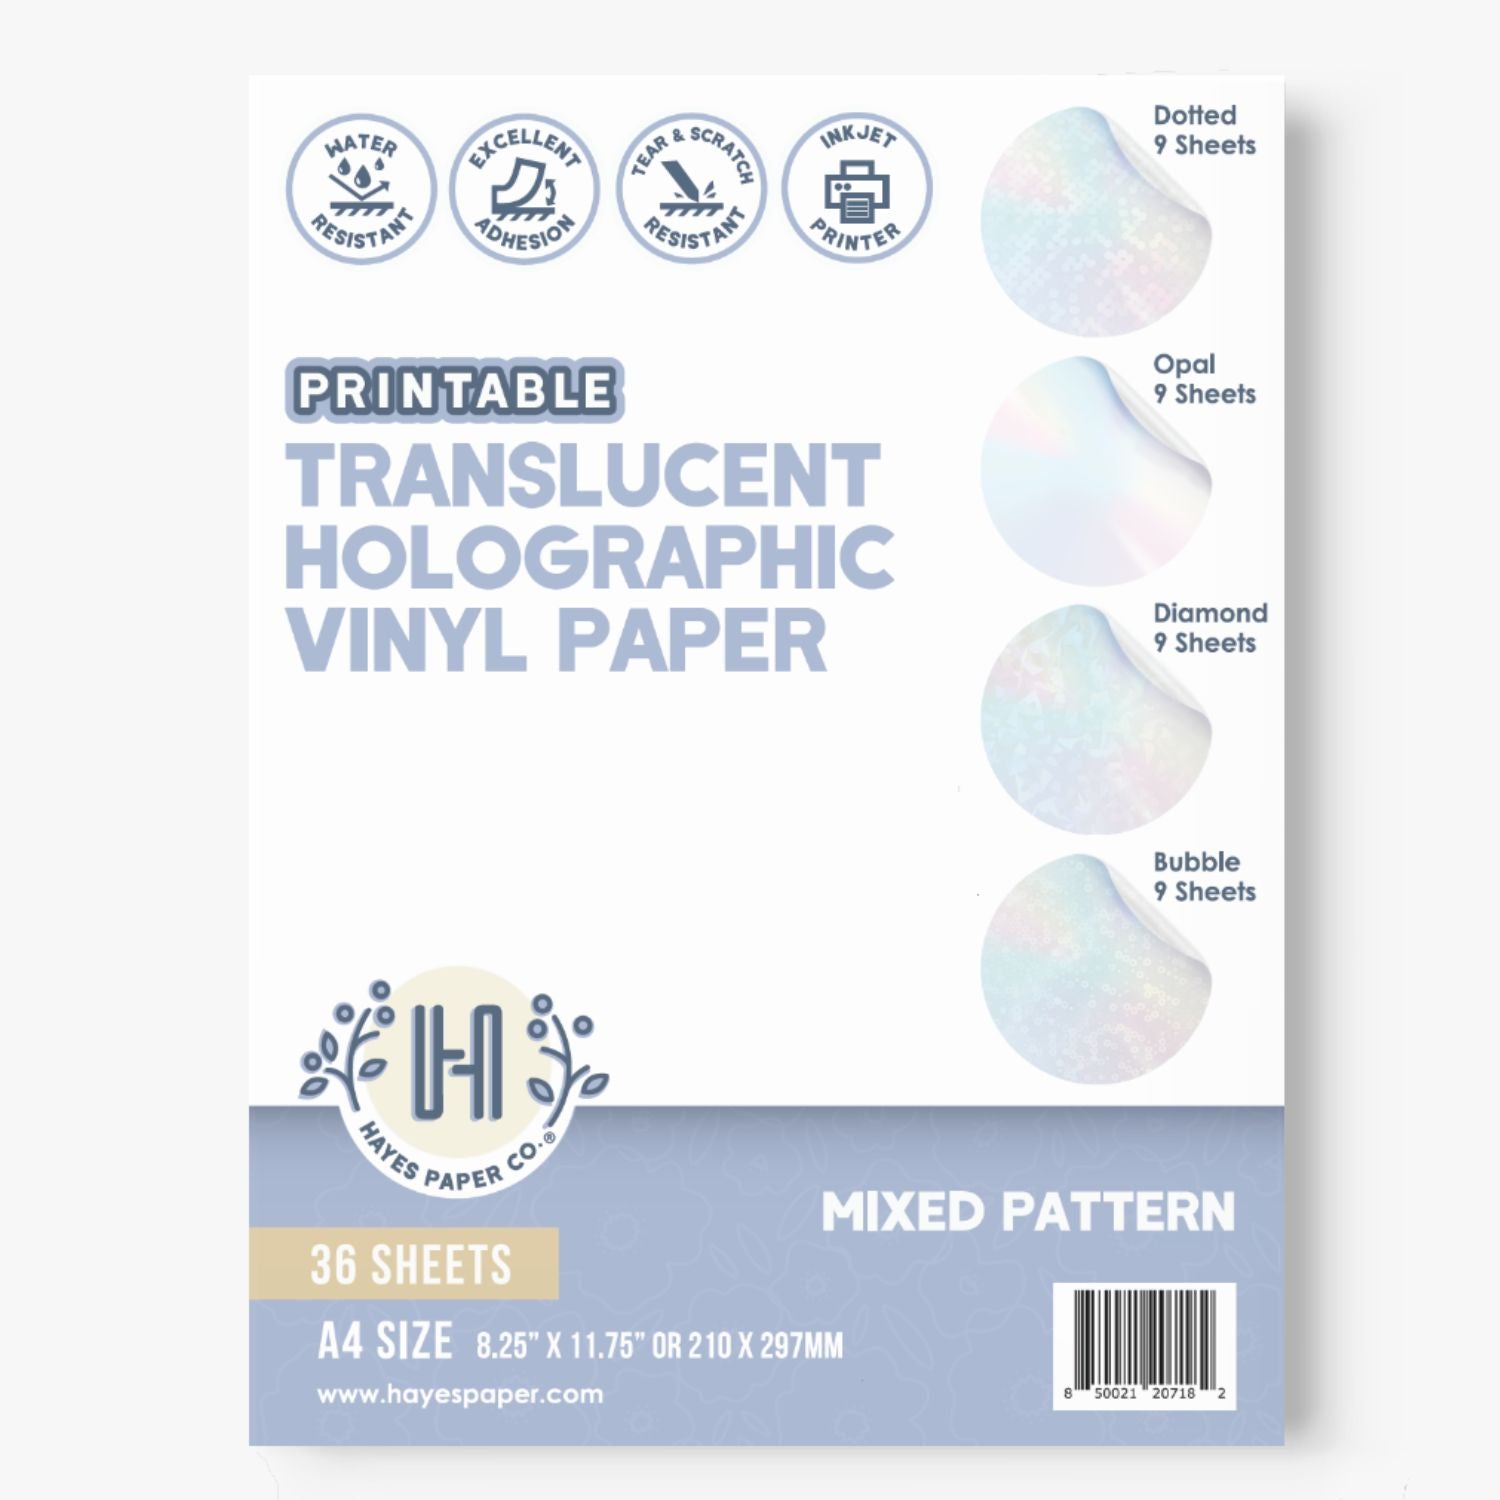 10Sheets Transparent Printable Vinyl Sticker Paper A4 Waterproof